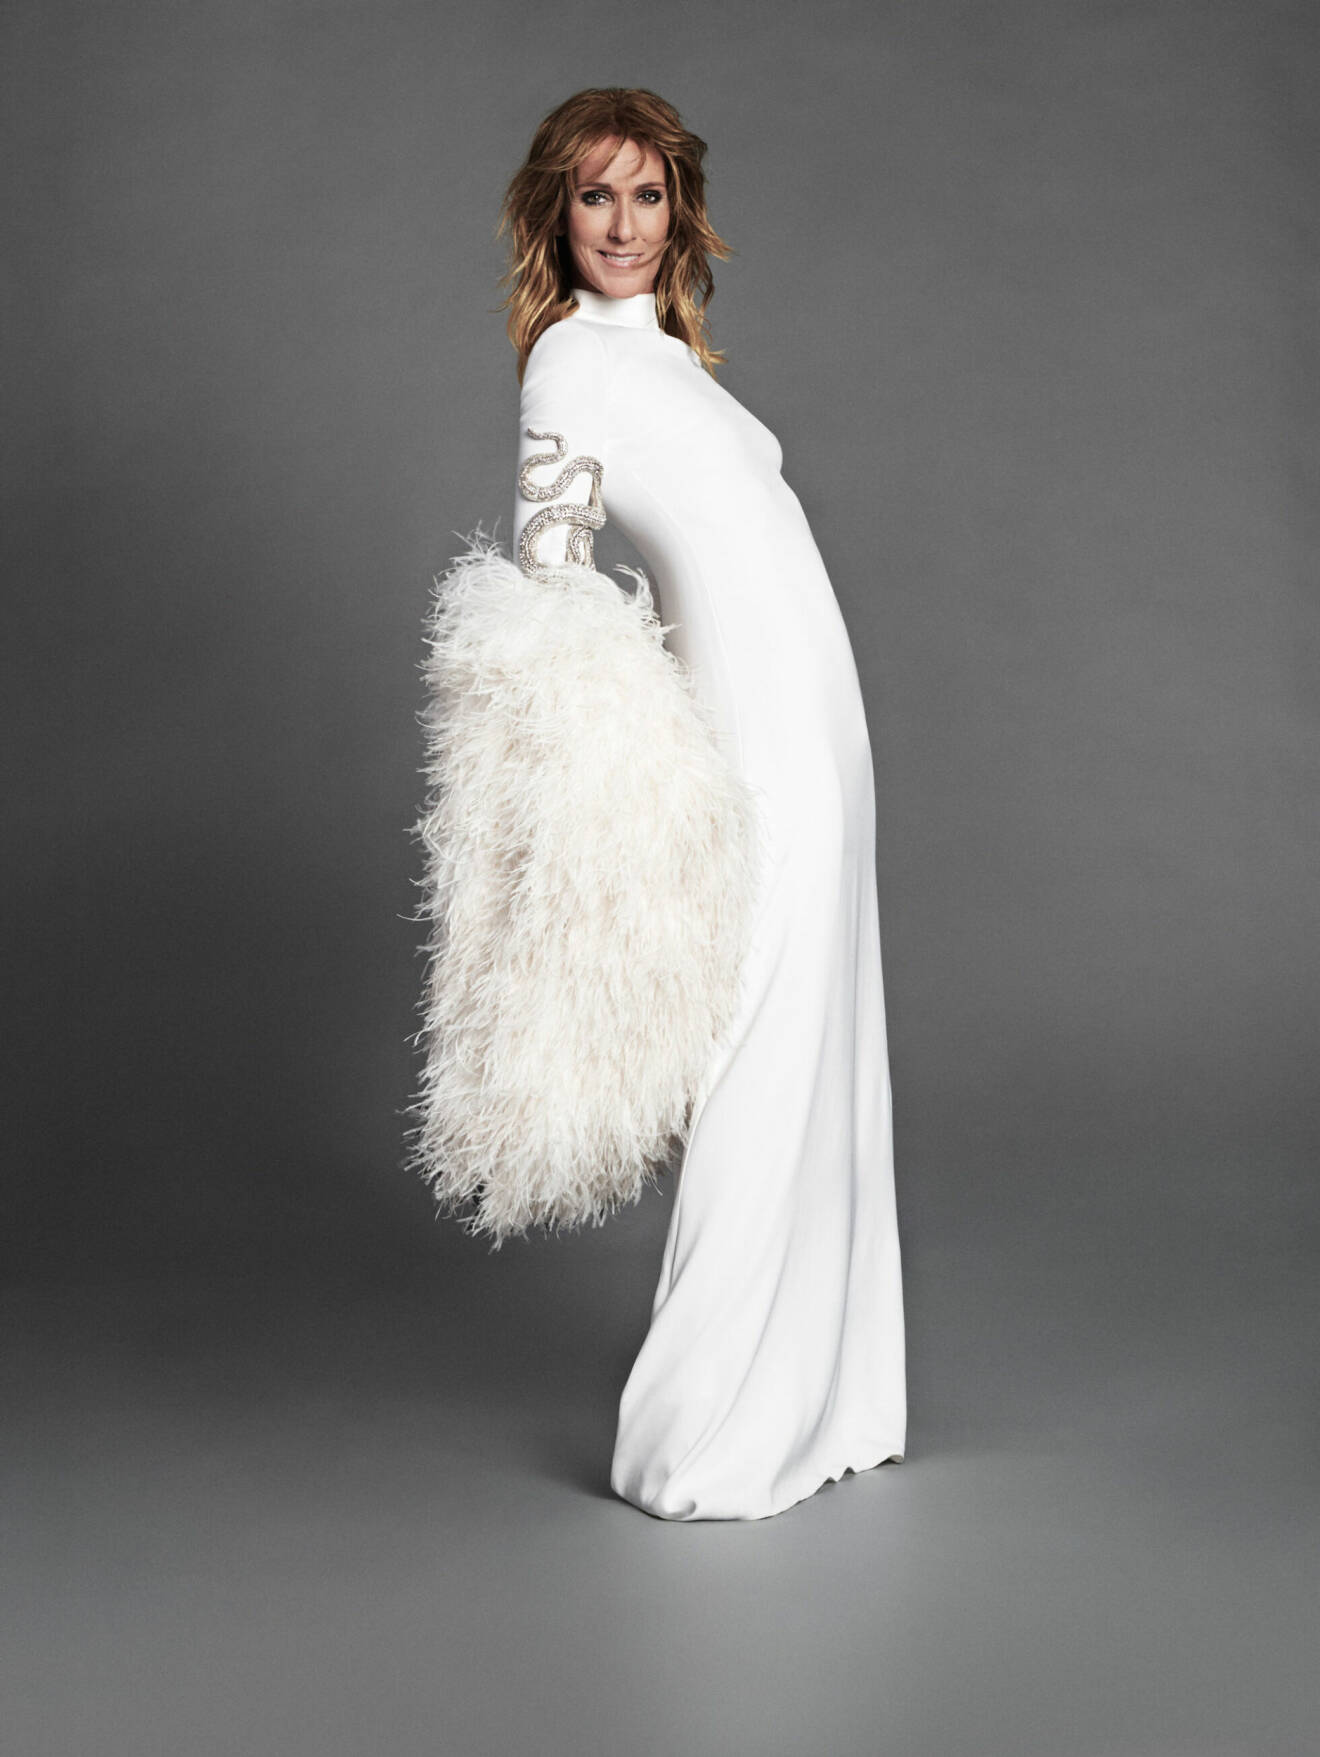 Céline Dion i vit långklänning från Giambattista Valli Couture.